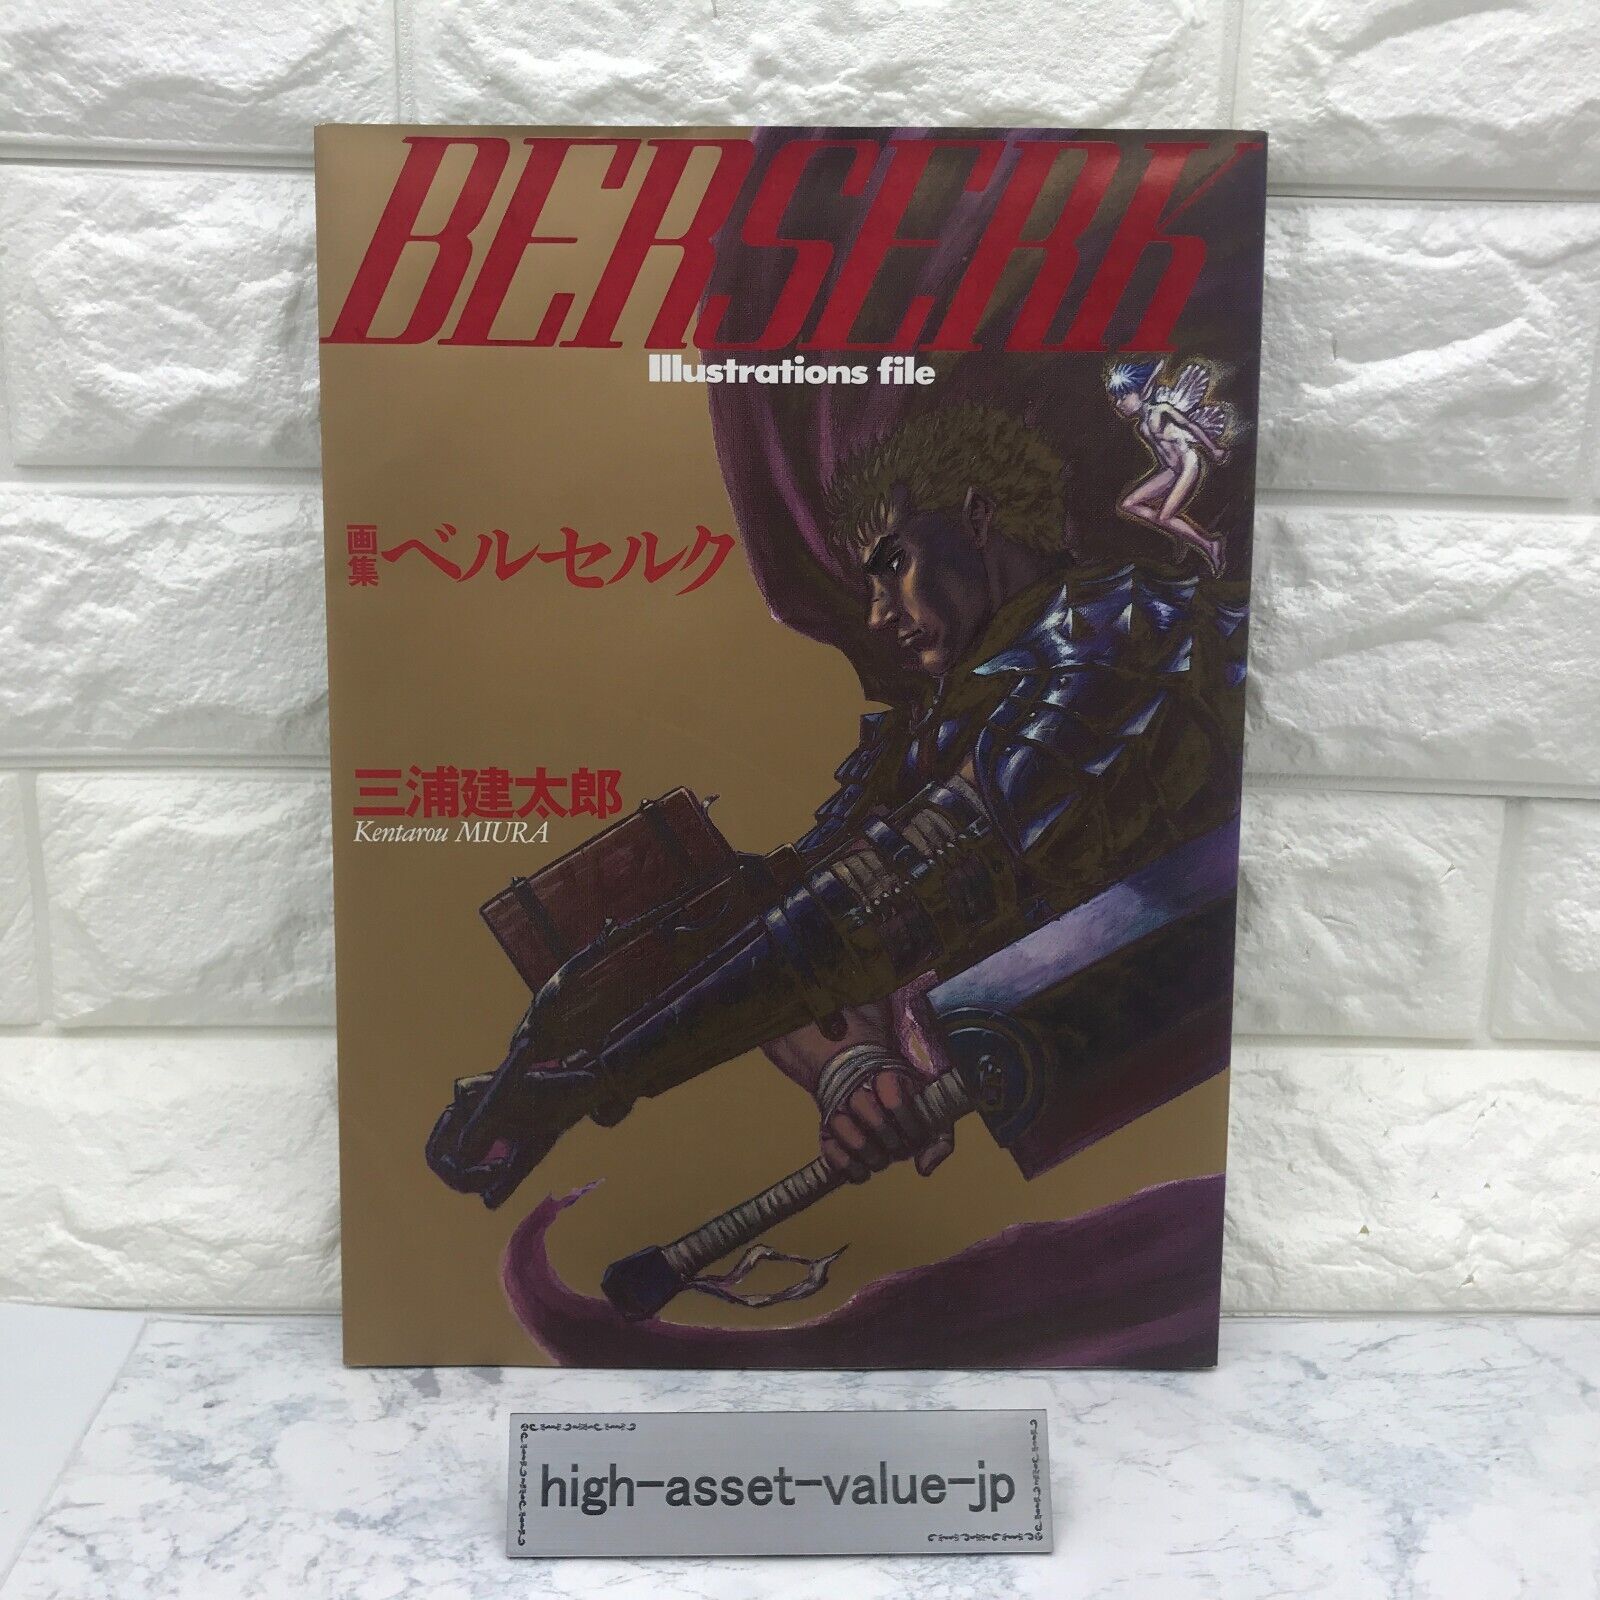 Berserk art book Kentaro Miura Illustrations File artworks JAPAN Anime Manga JA